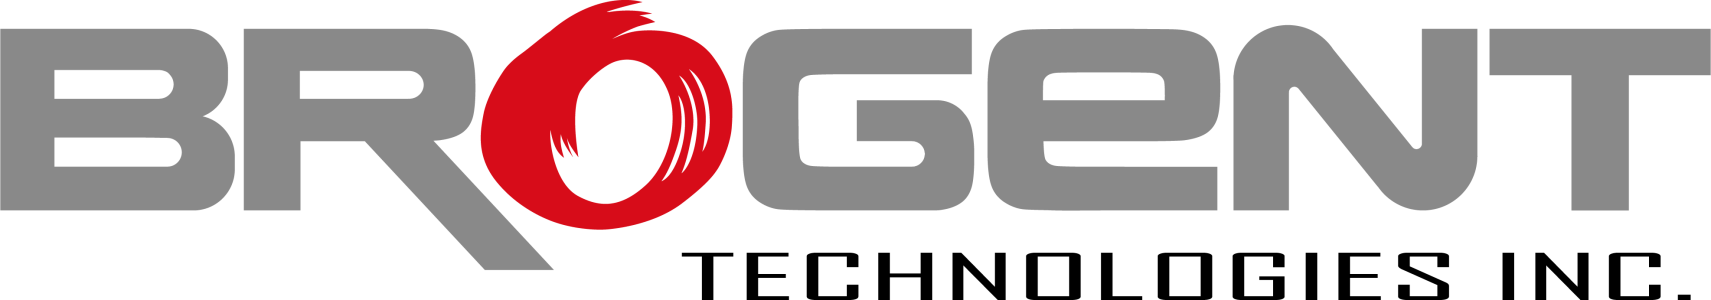 Brogent Technologies, Inc. Logo